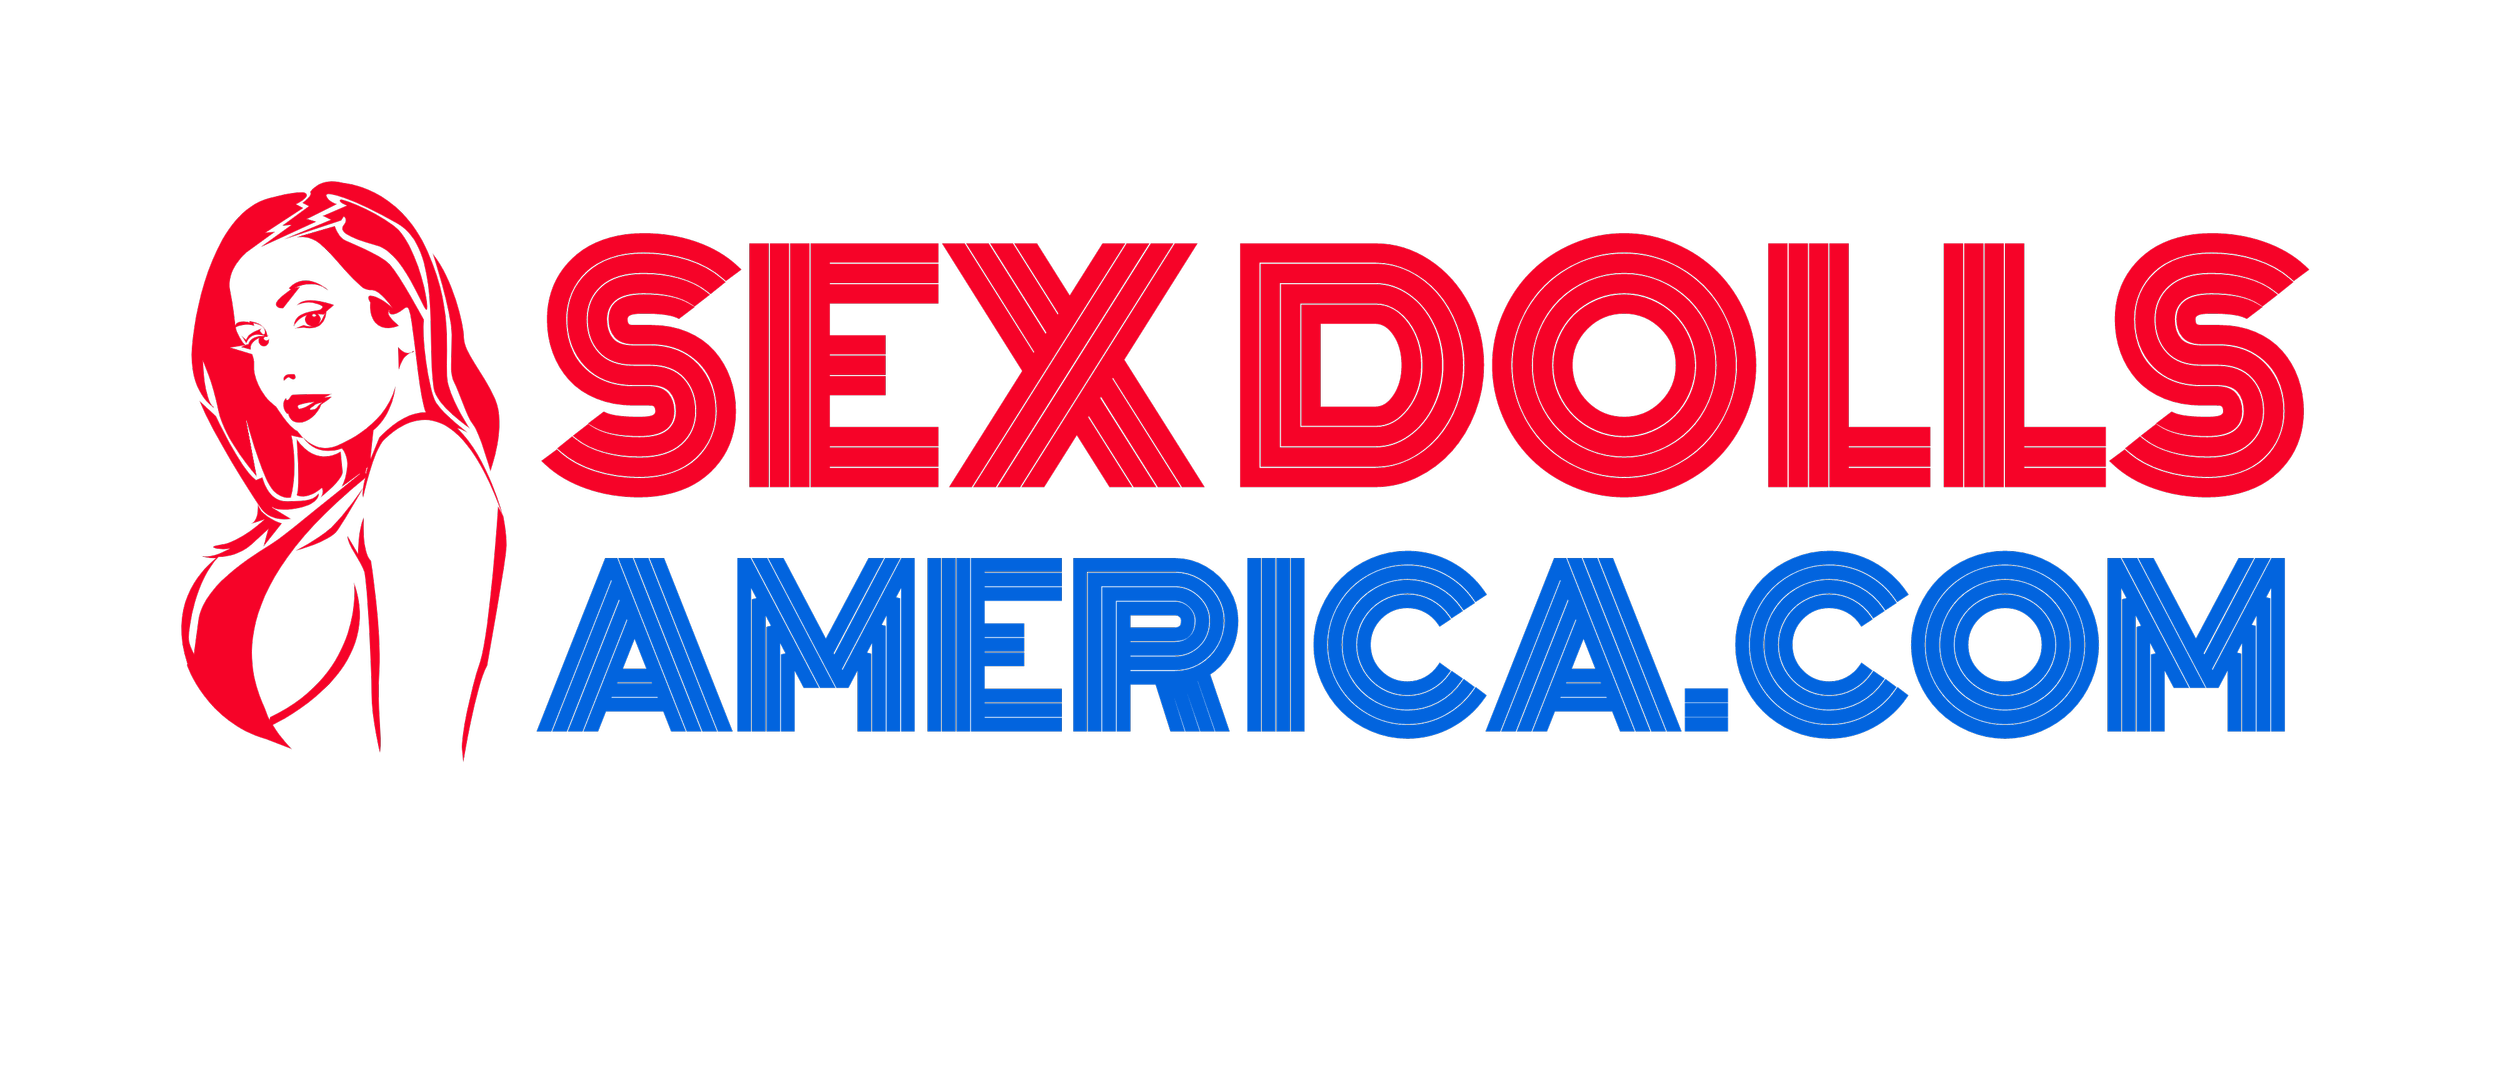 SEX DOLLS-logo.png